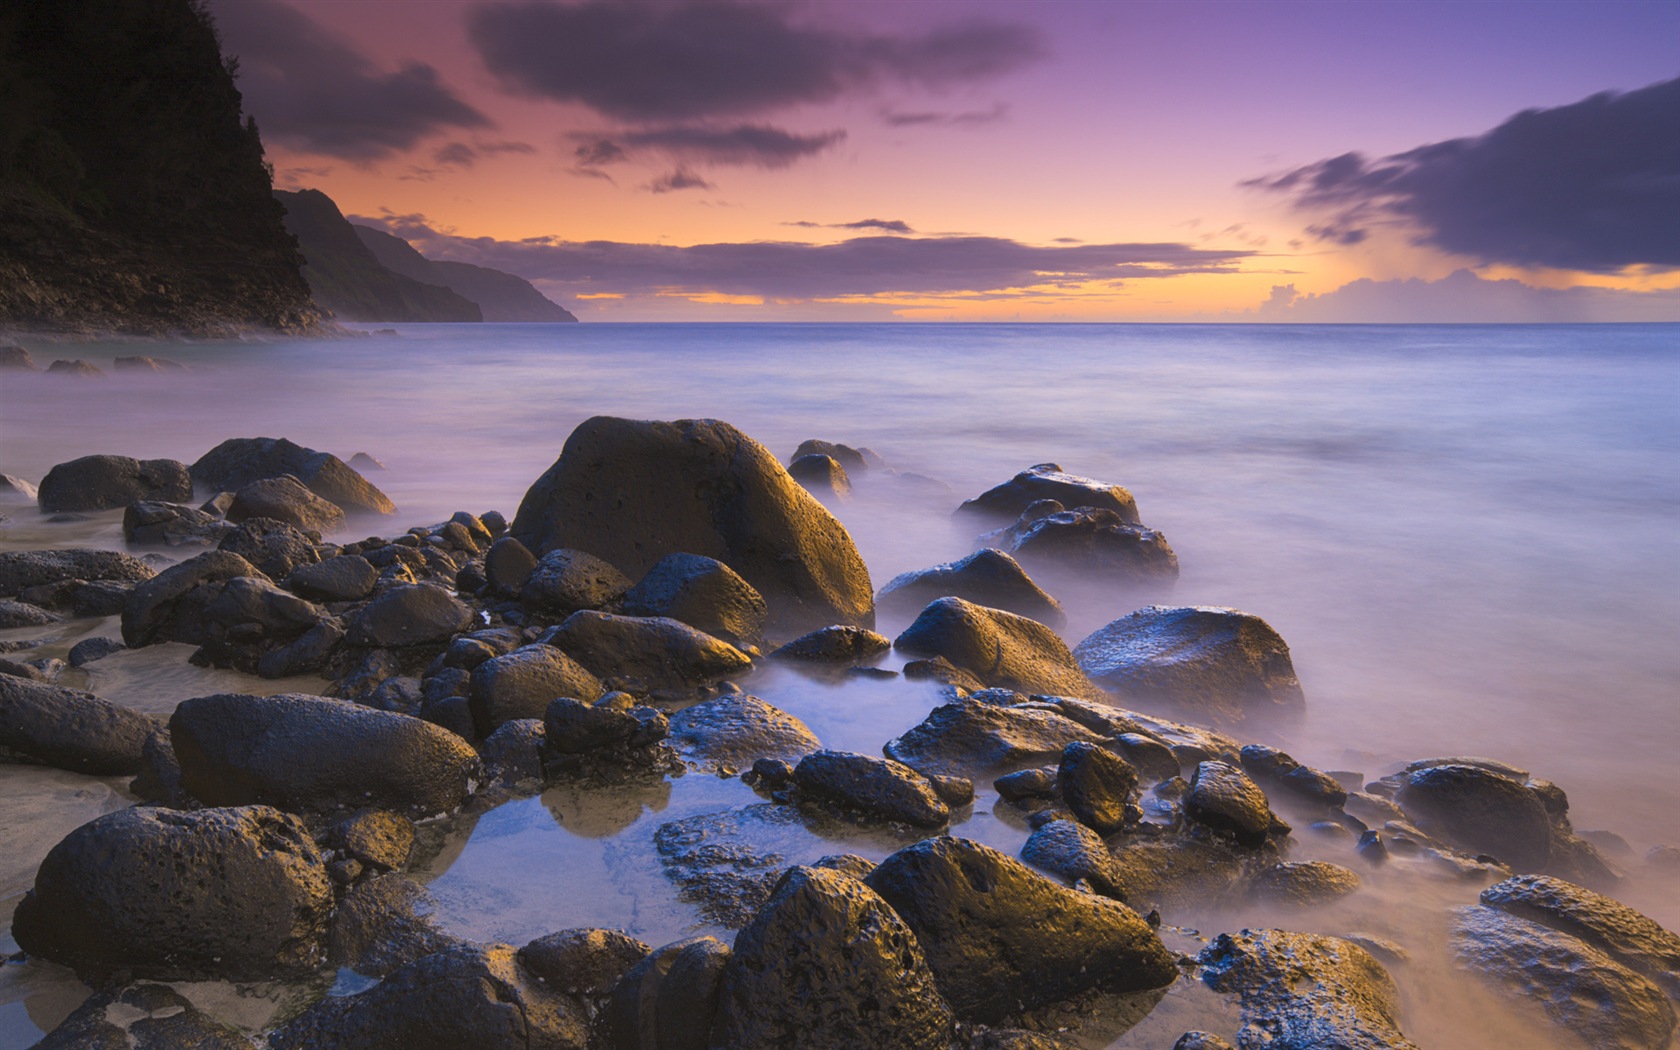 Windows 8 theme wallpaper: Beach sunrise and sunset views #7 - 1680x1050